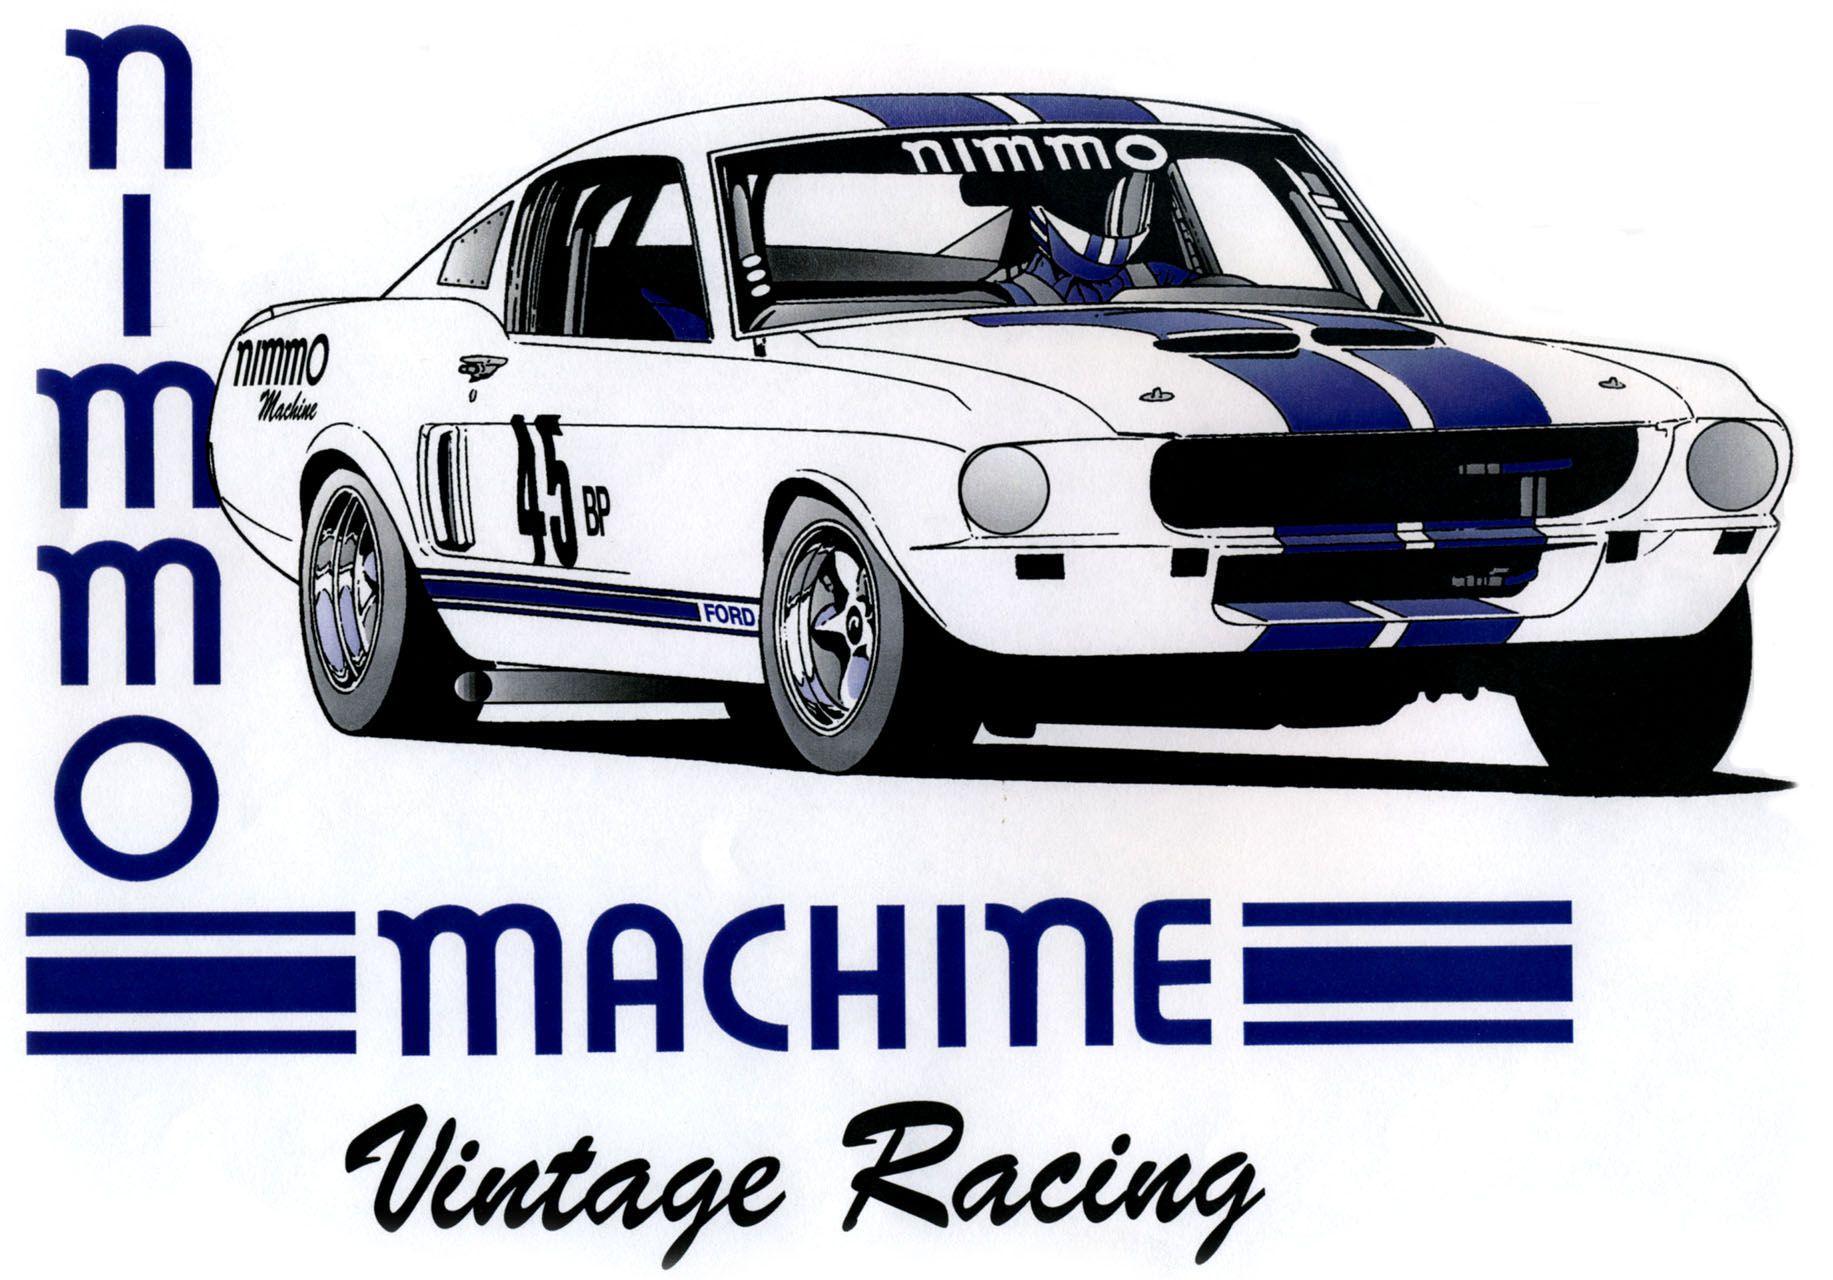 Cool Race Logo - Cool Ford Racing Logos - image #186